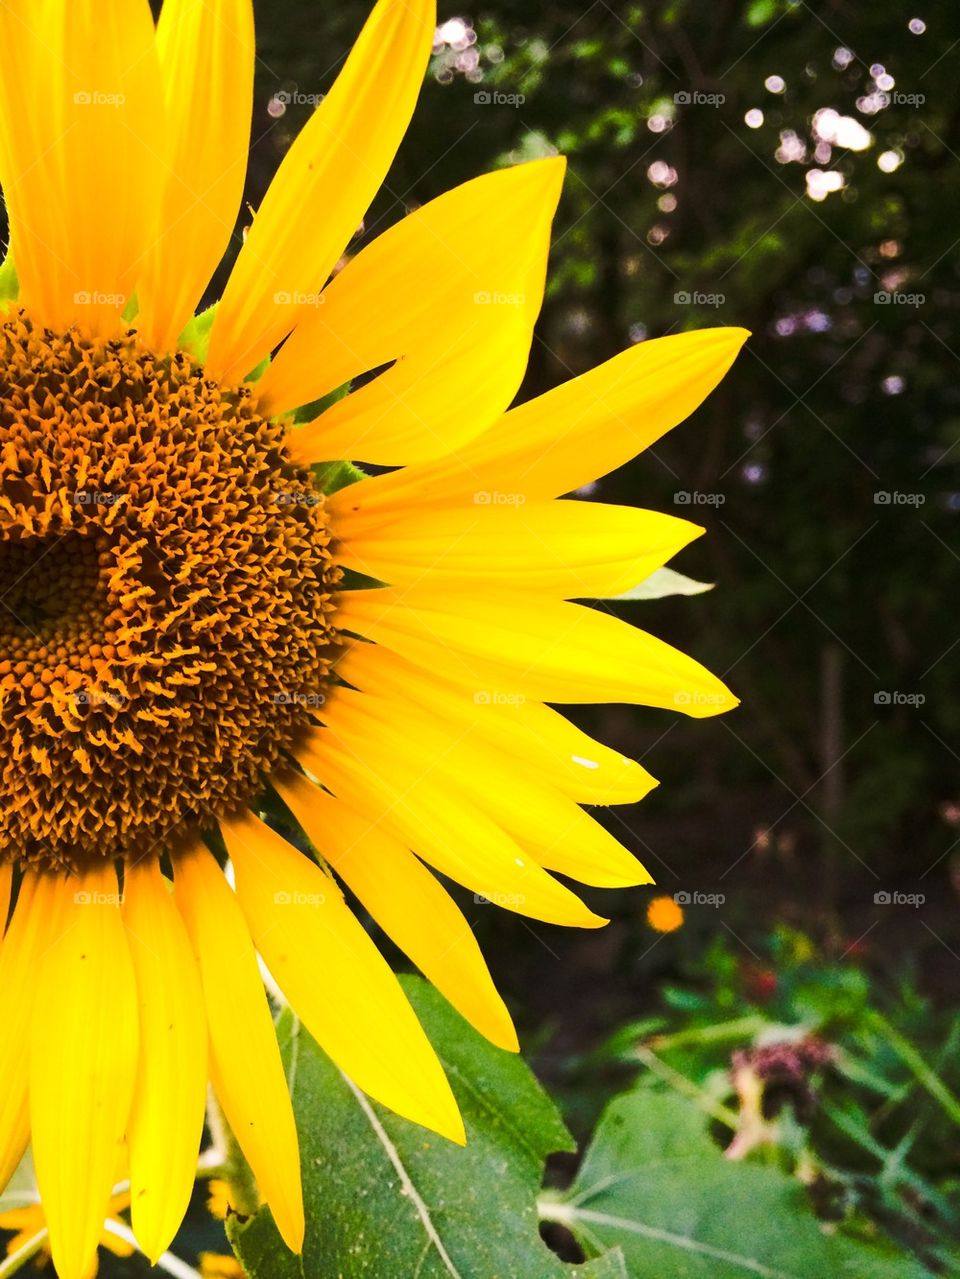 Sunflower Daze